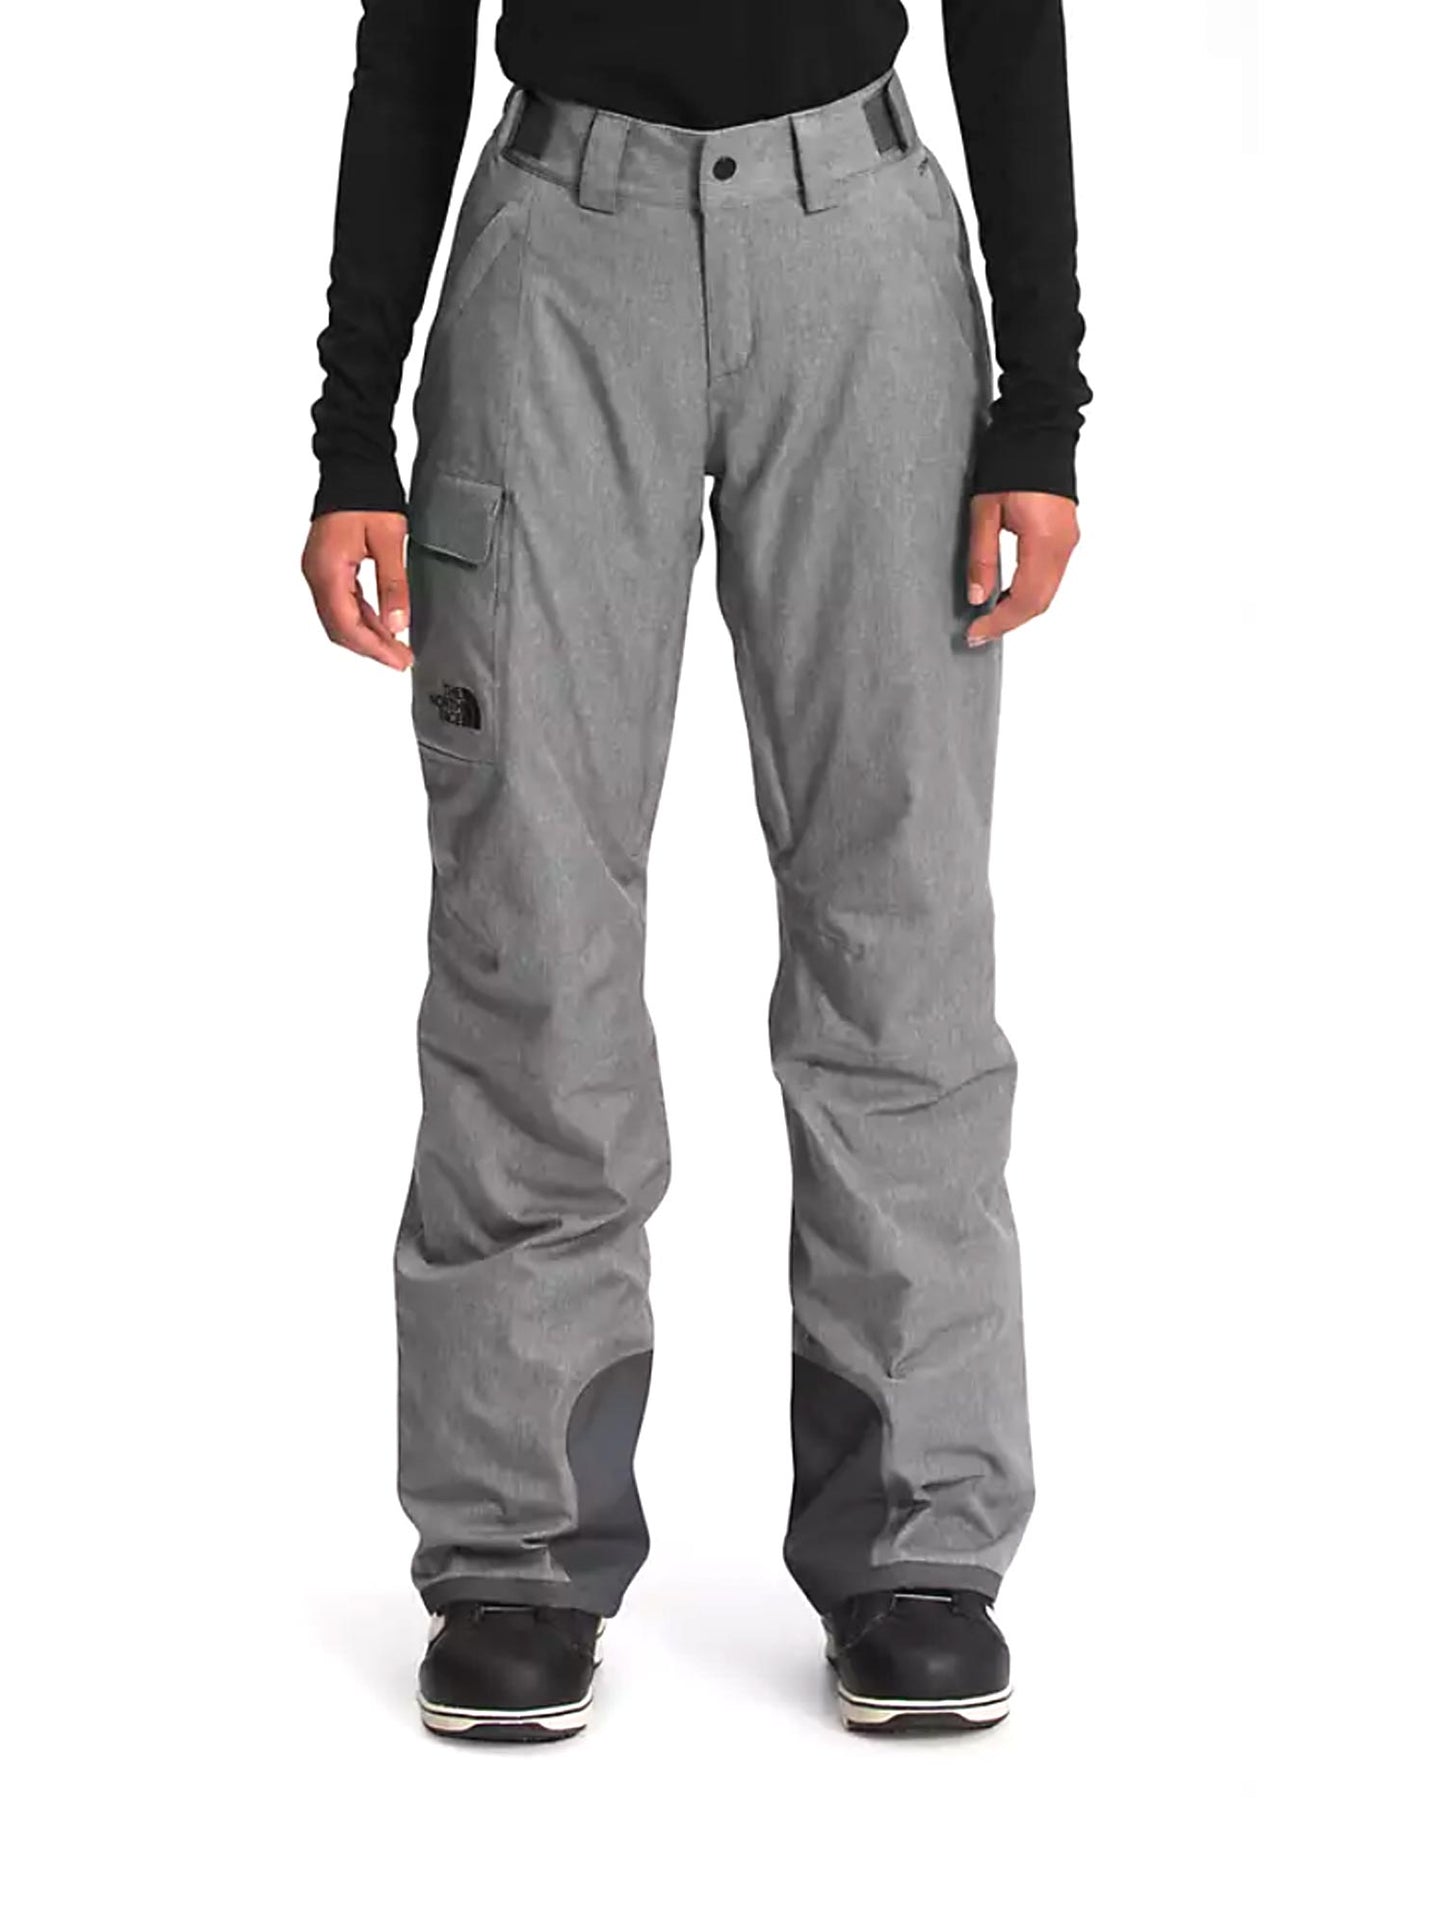 women's The North Face ski pants, grey